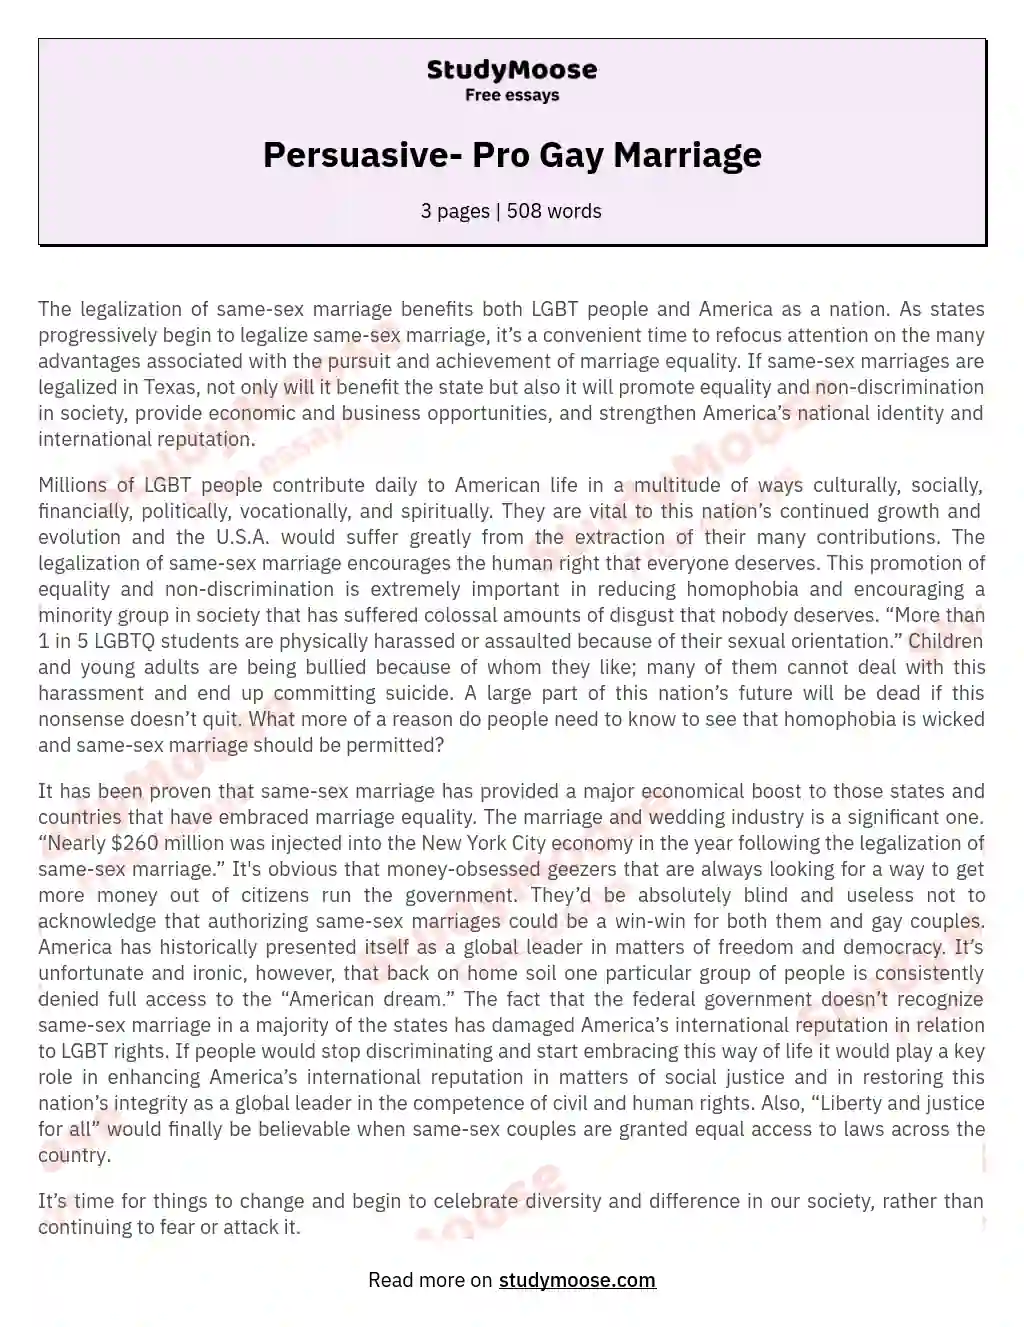 Persuasive- Pro Gay Marriage essay